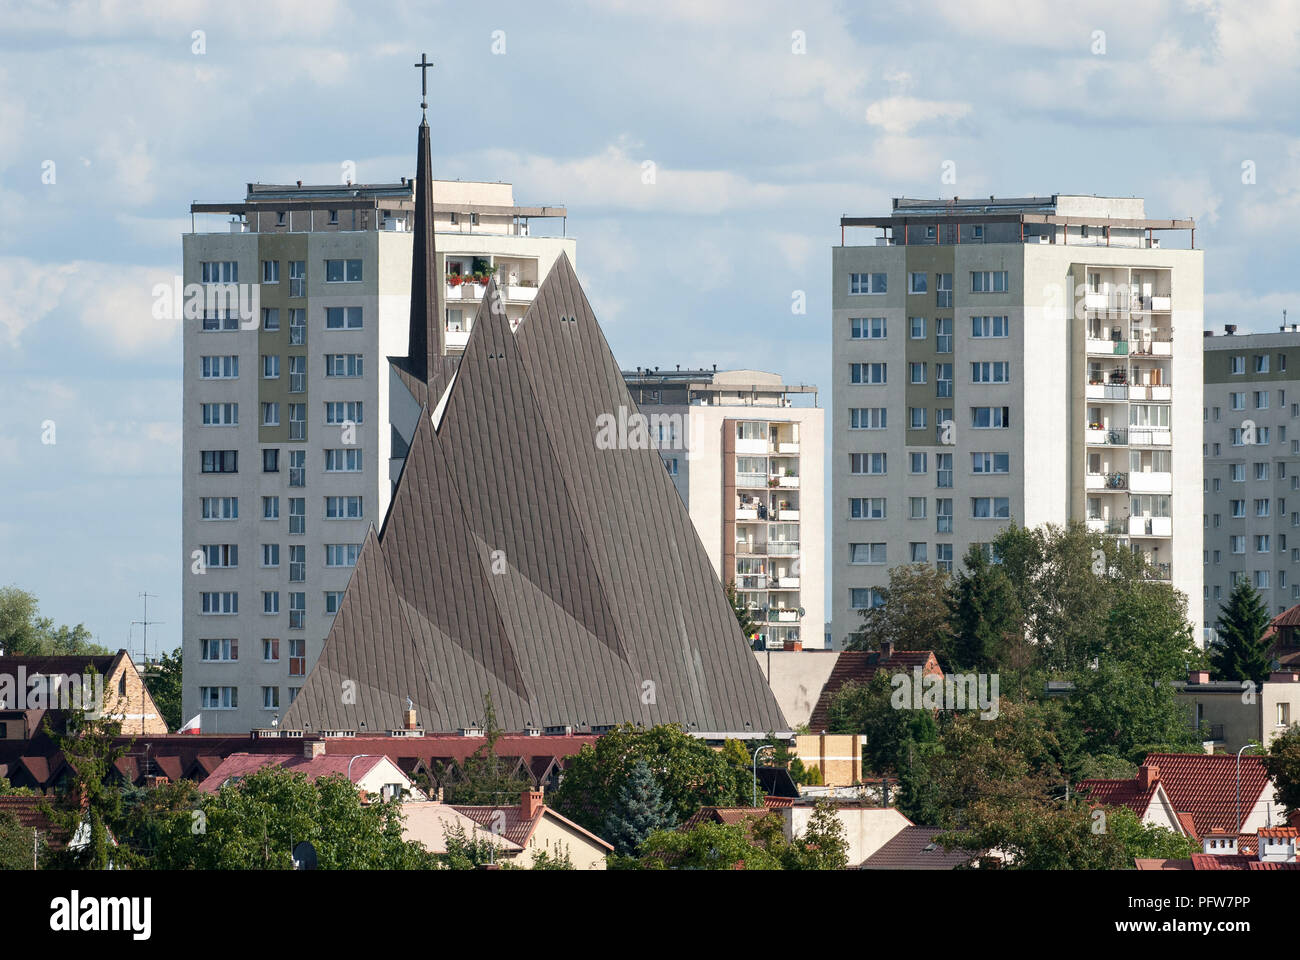 Communist era apartment buildings in Gdansk, Poland. August 12th 2018 © Wojciech Strozyk / Alamy Stock Photo Stock Photo